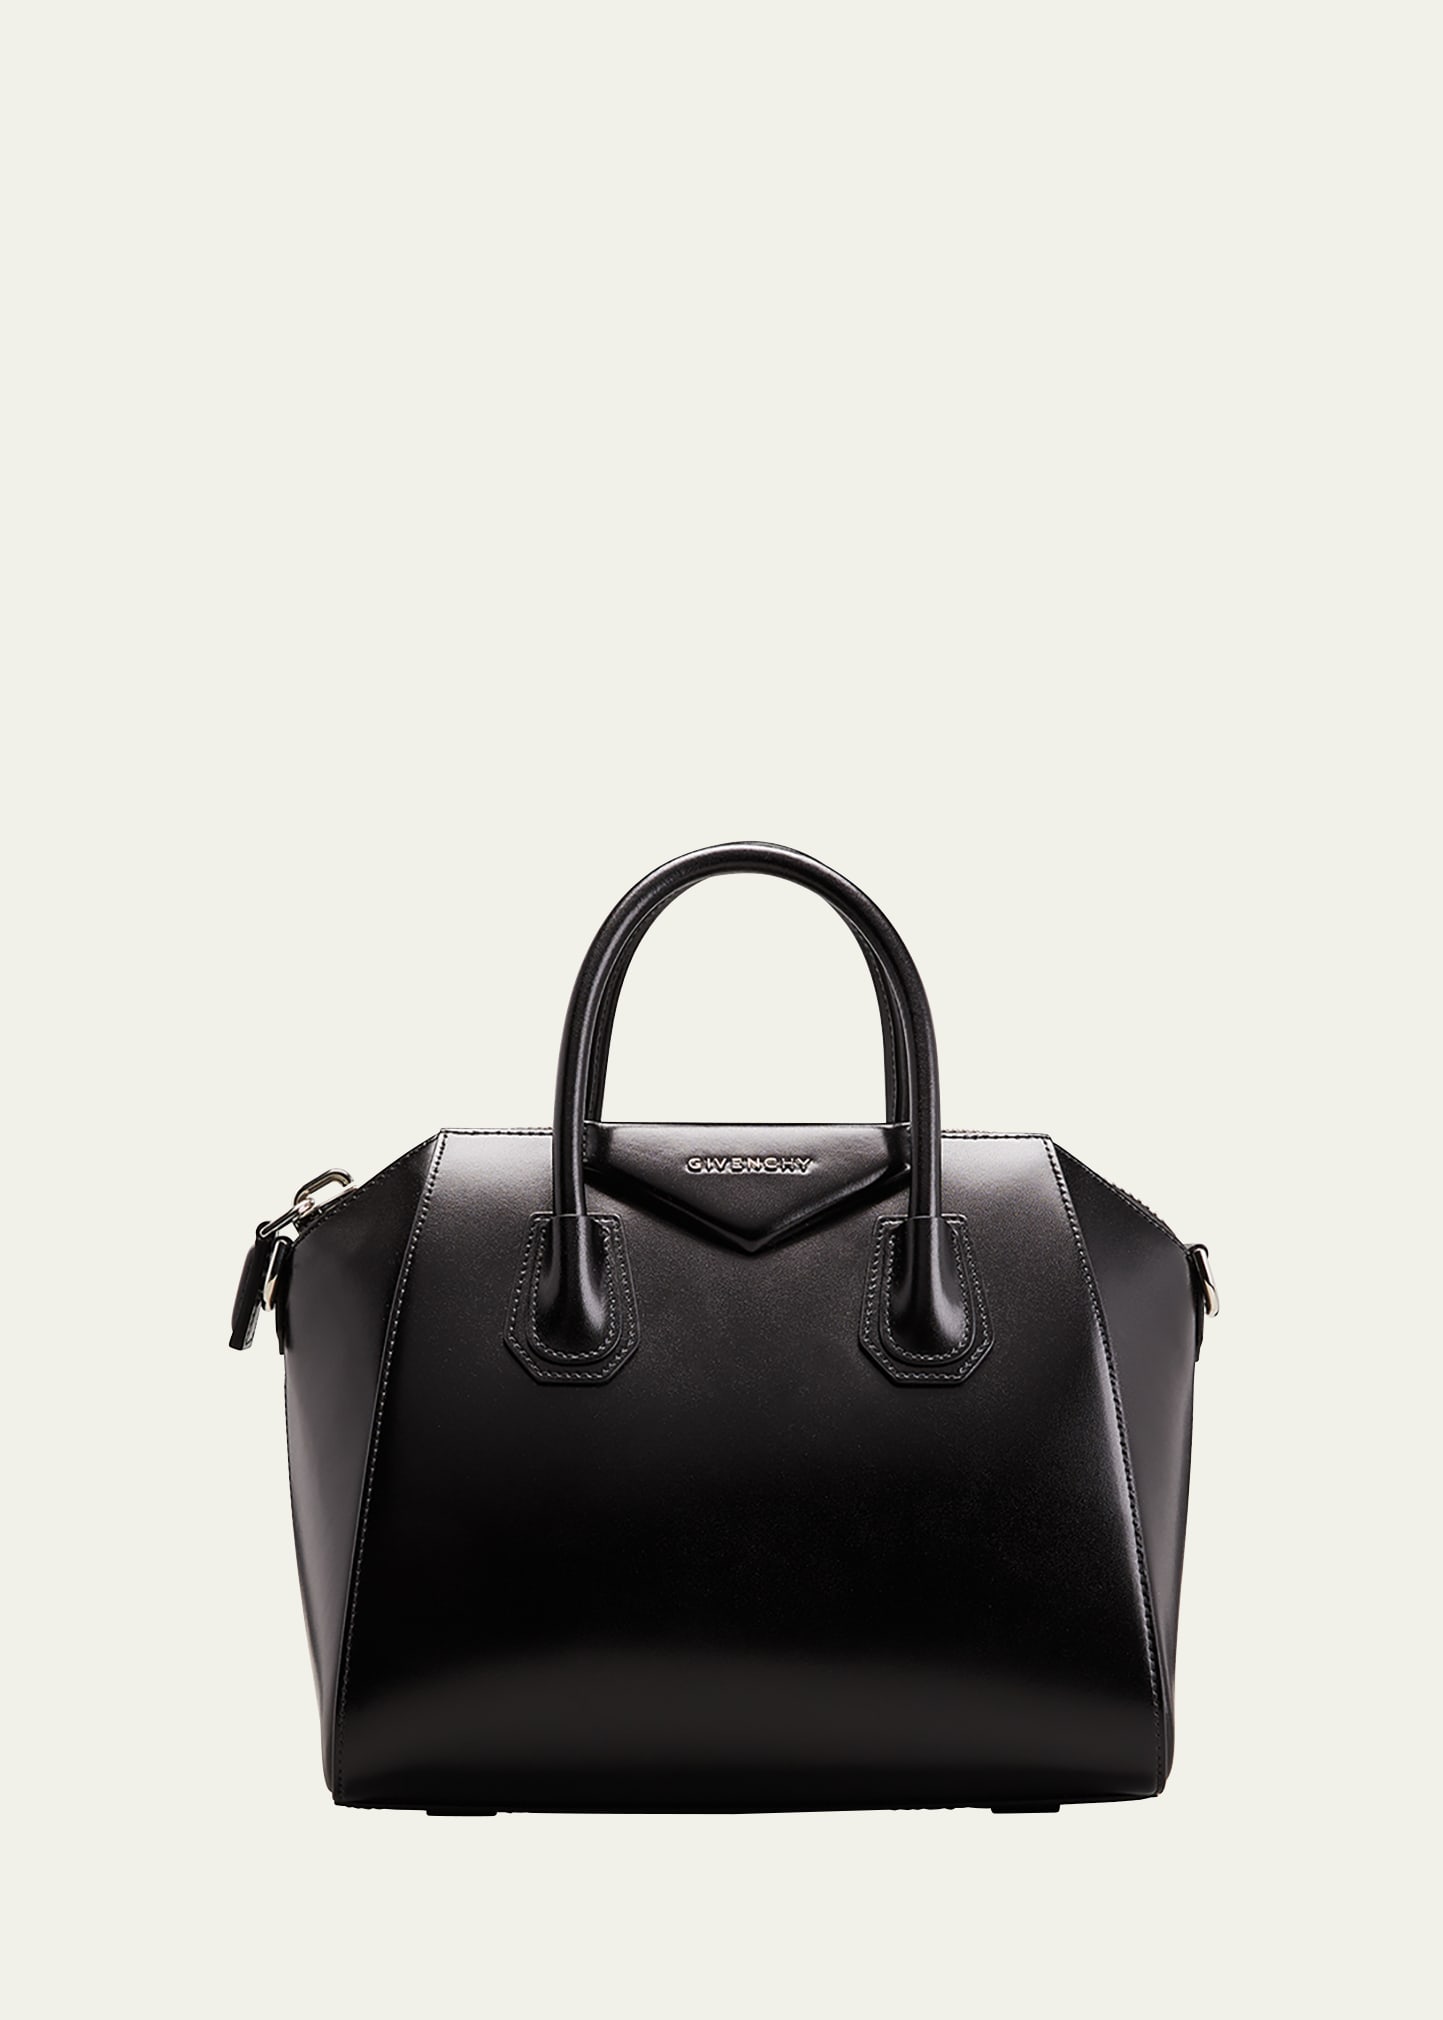 Givenchy - Antigona Small Leather Bag - Womens - Black for Women